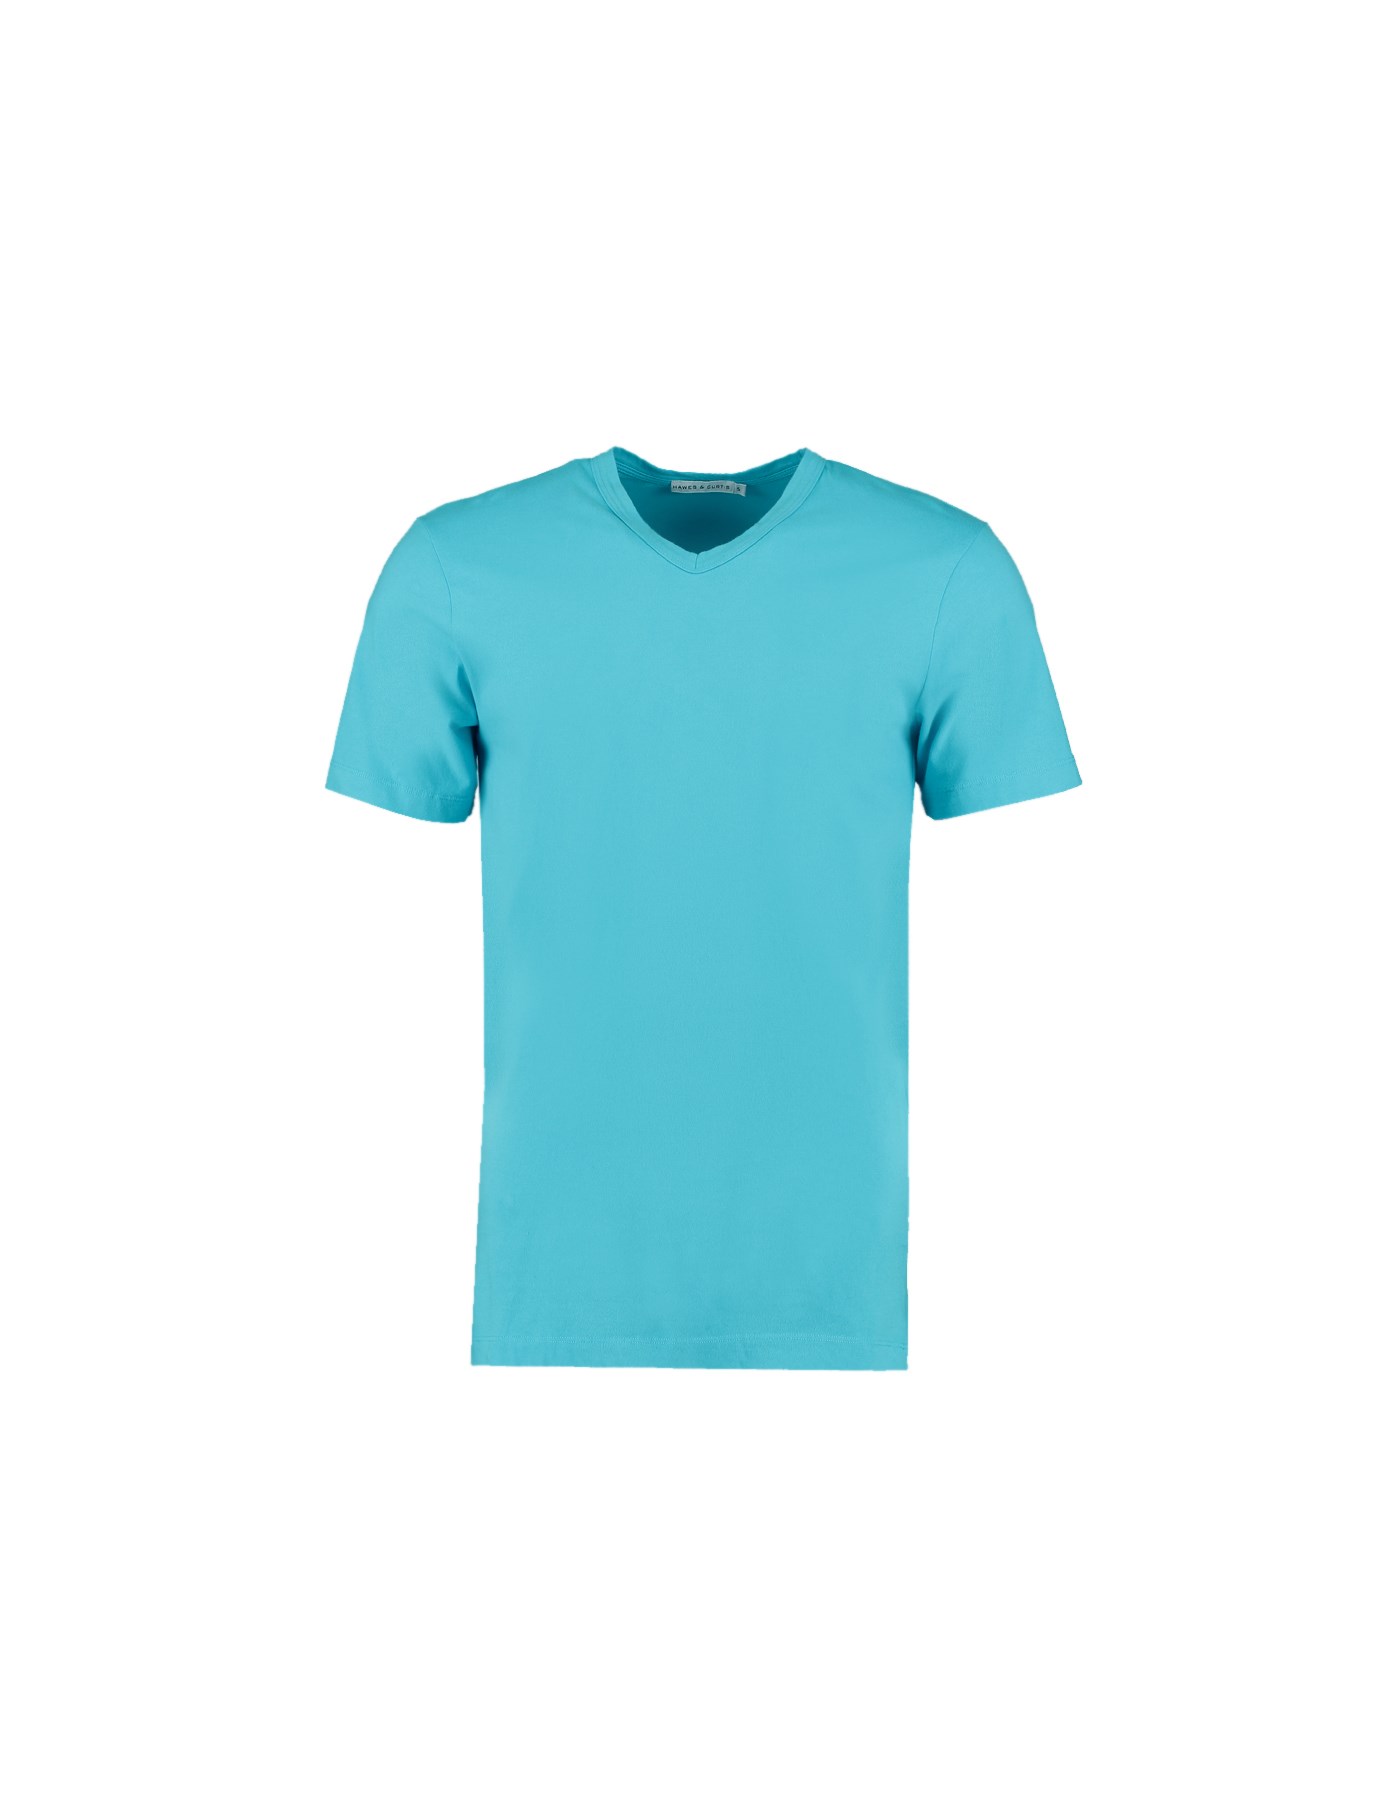 Men's Turquoise Garment Dye V Neck T-Shirt - 100% Supima Cotton | Hawes ...